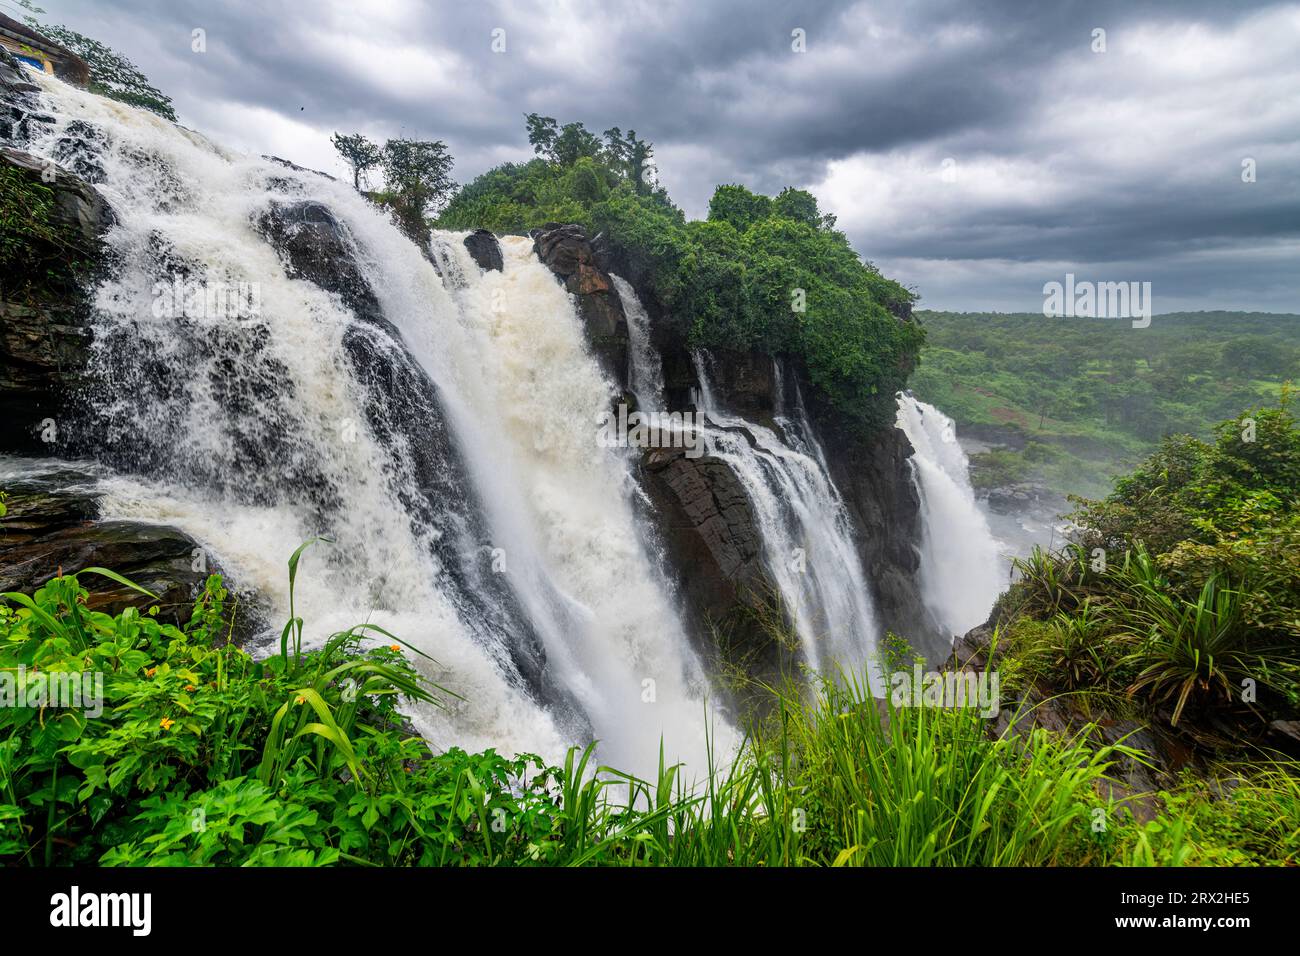 Roaring Boali Falls (Chutes de Boali), Central African Republic, Africa Stock Photo